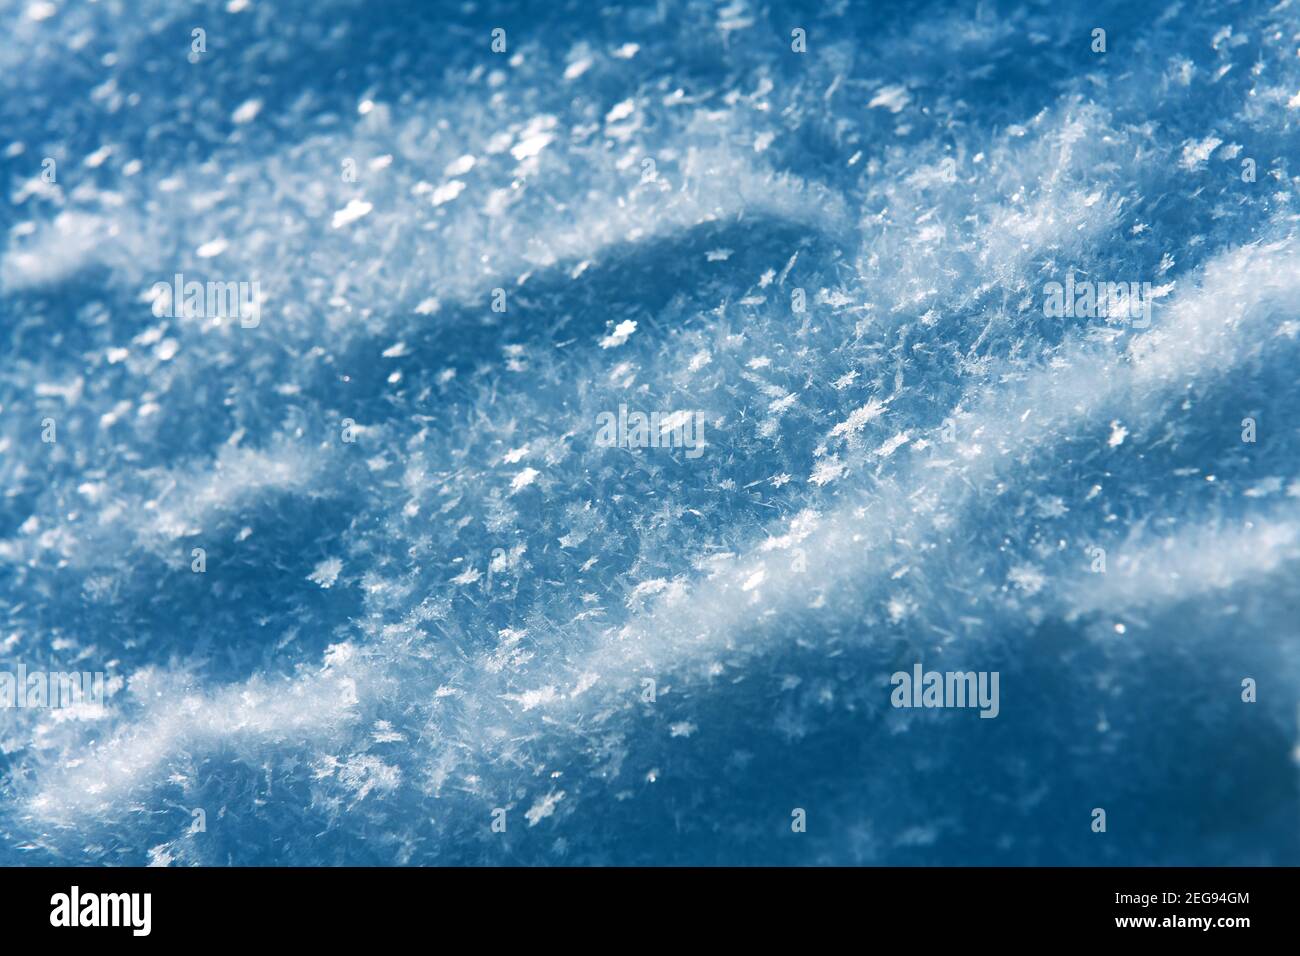 Snow texture with frozen snowflakes background closeup Stock Photo